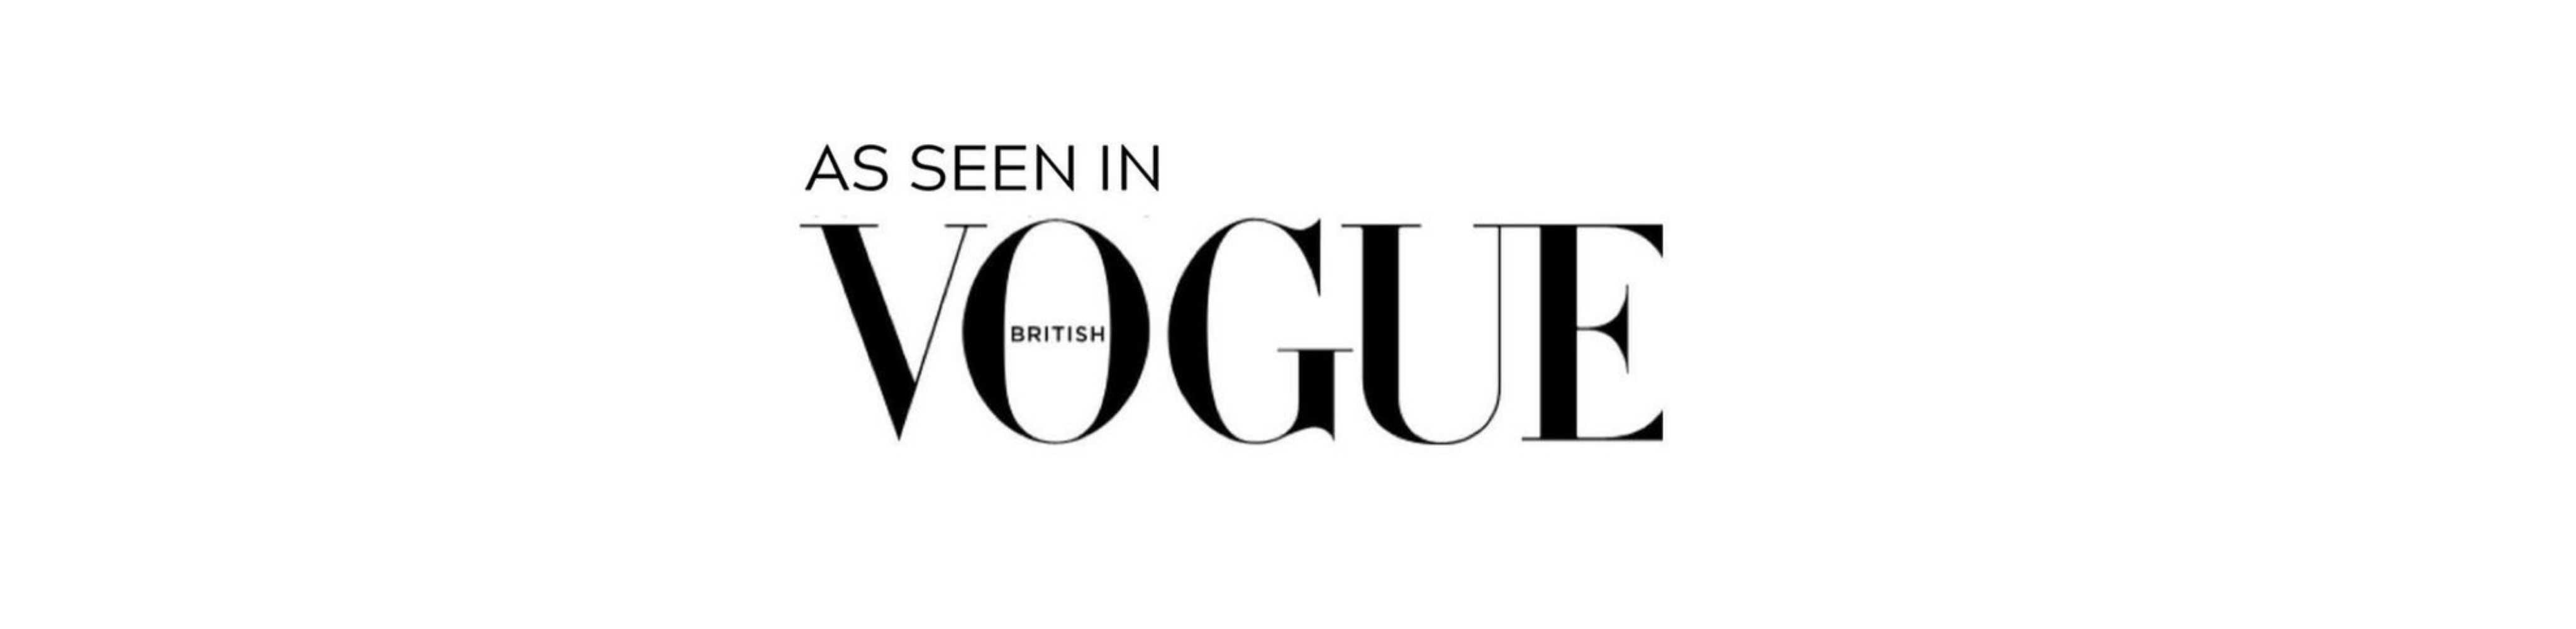 As Seen in Vogue - Ben & Ellie Baby Nappy Change Clutch